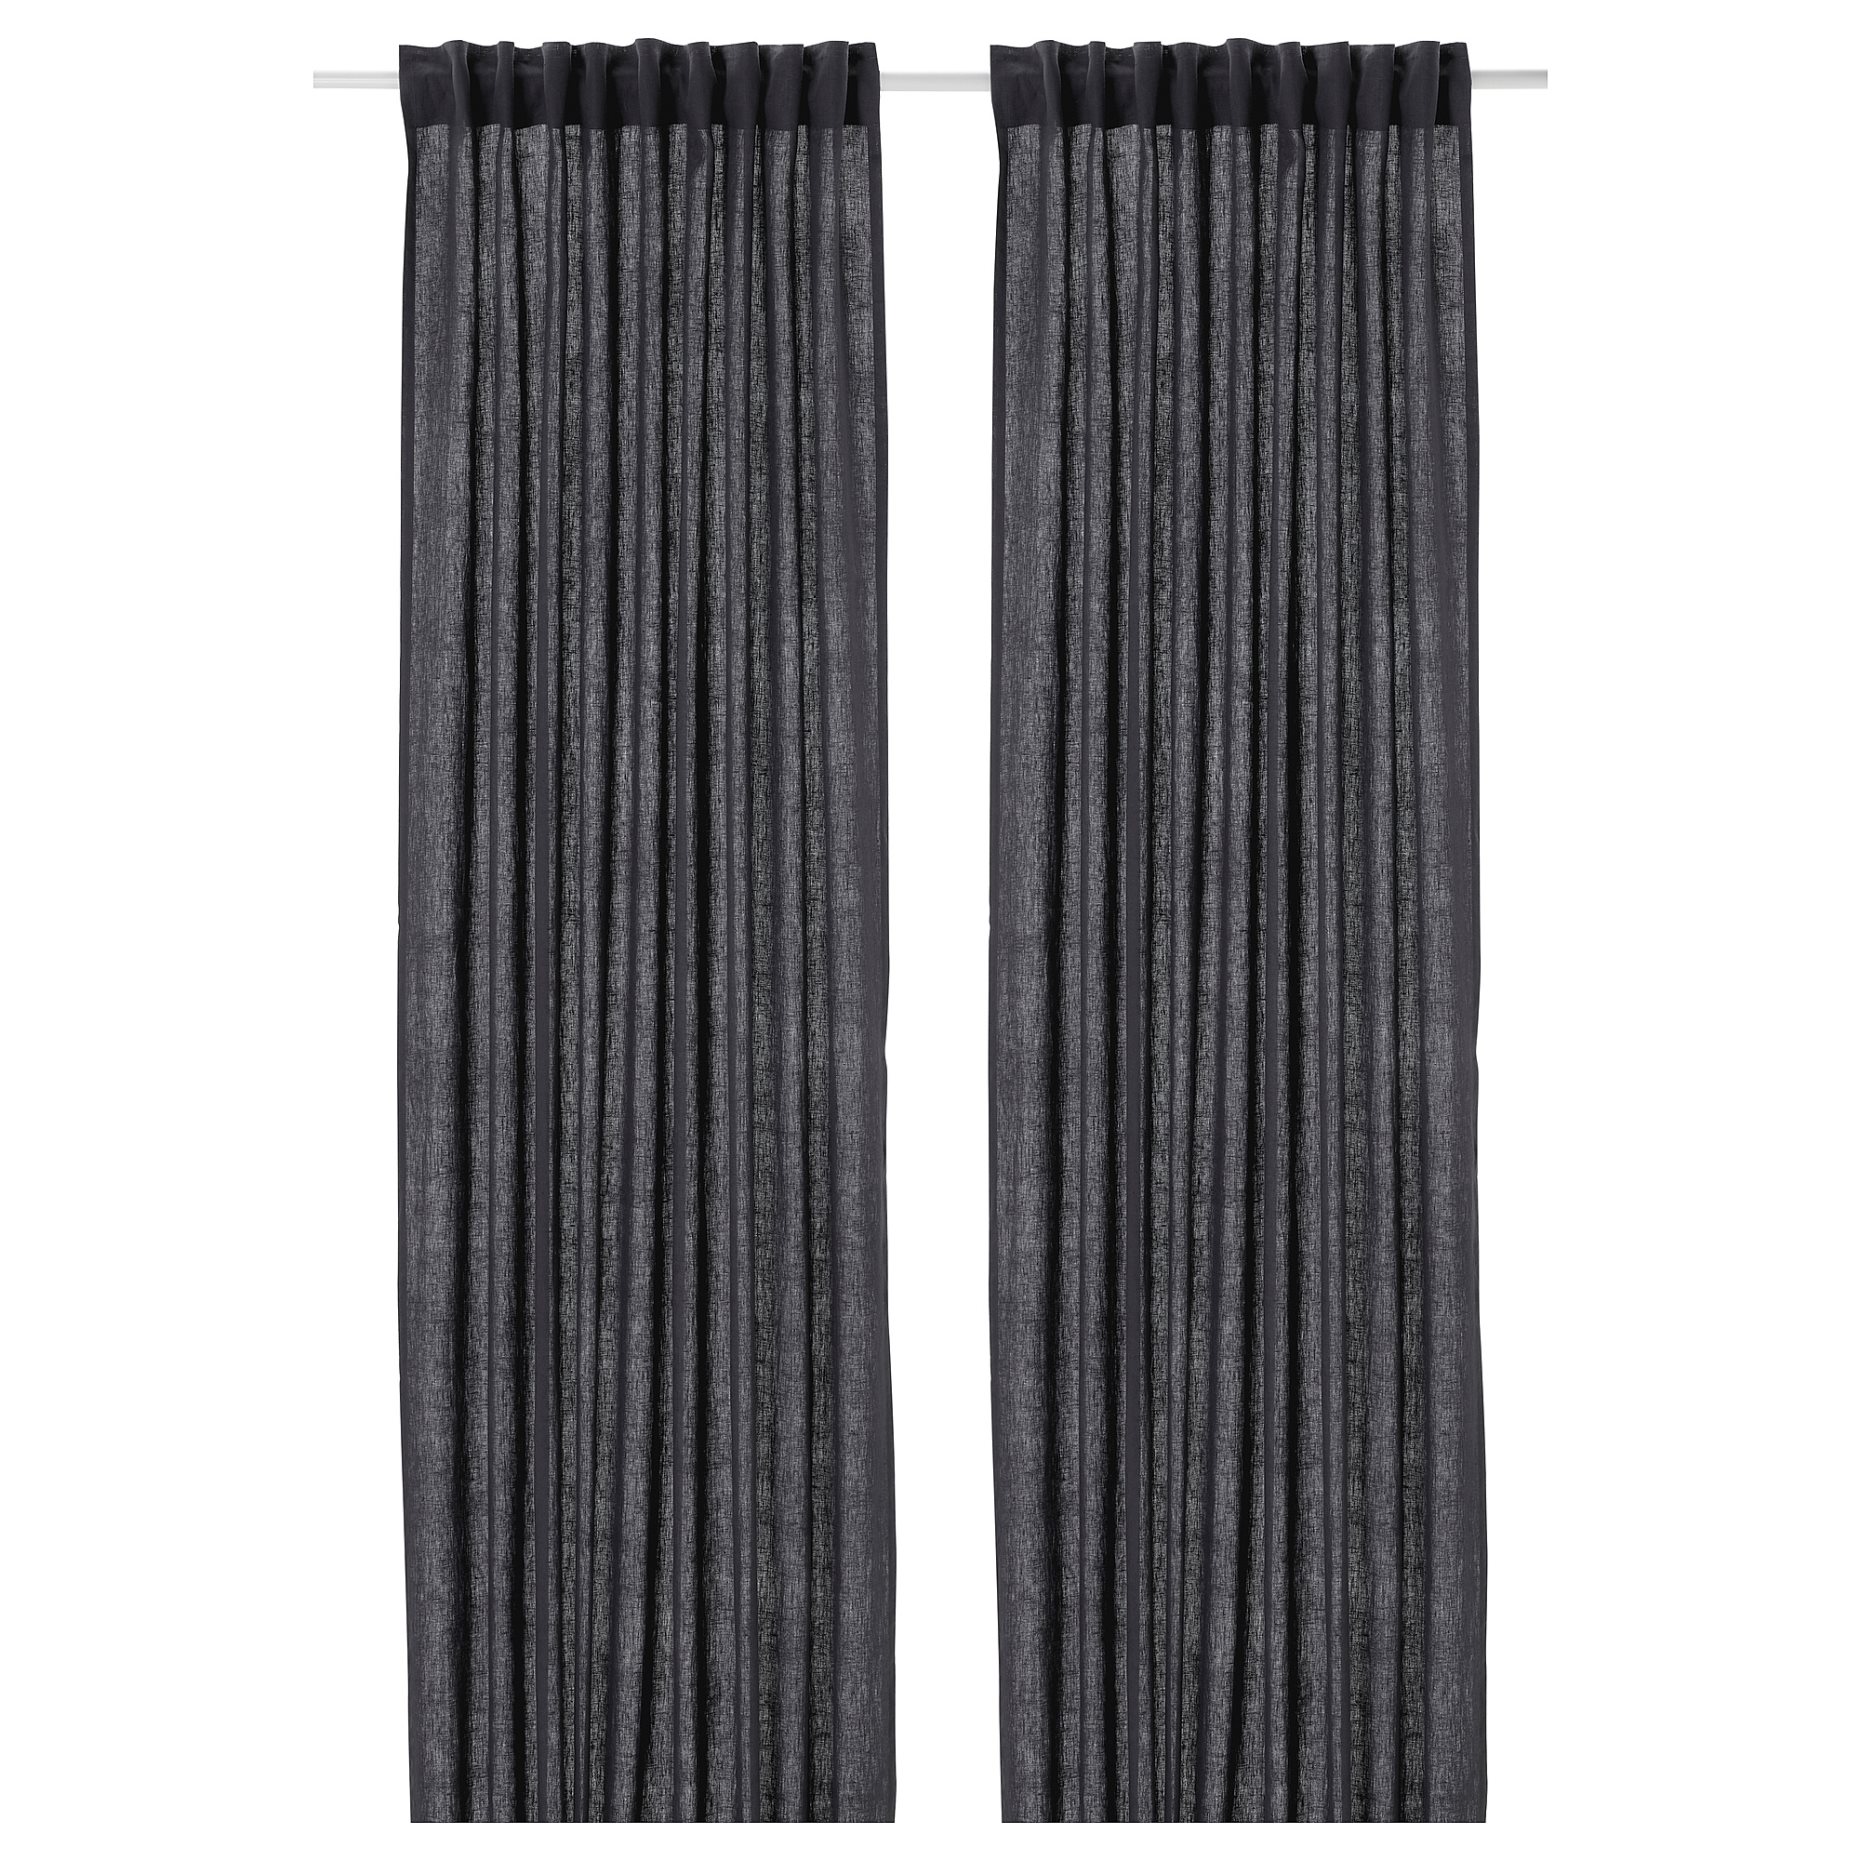 DYTÅG, curtains 1 pair, 145x300 cm, 205.191.43